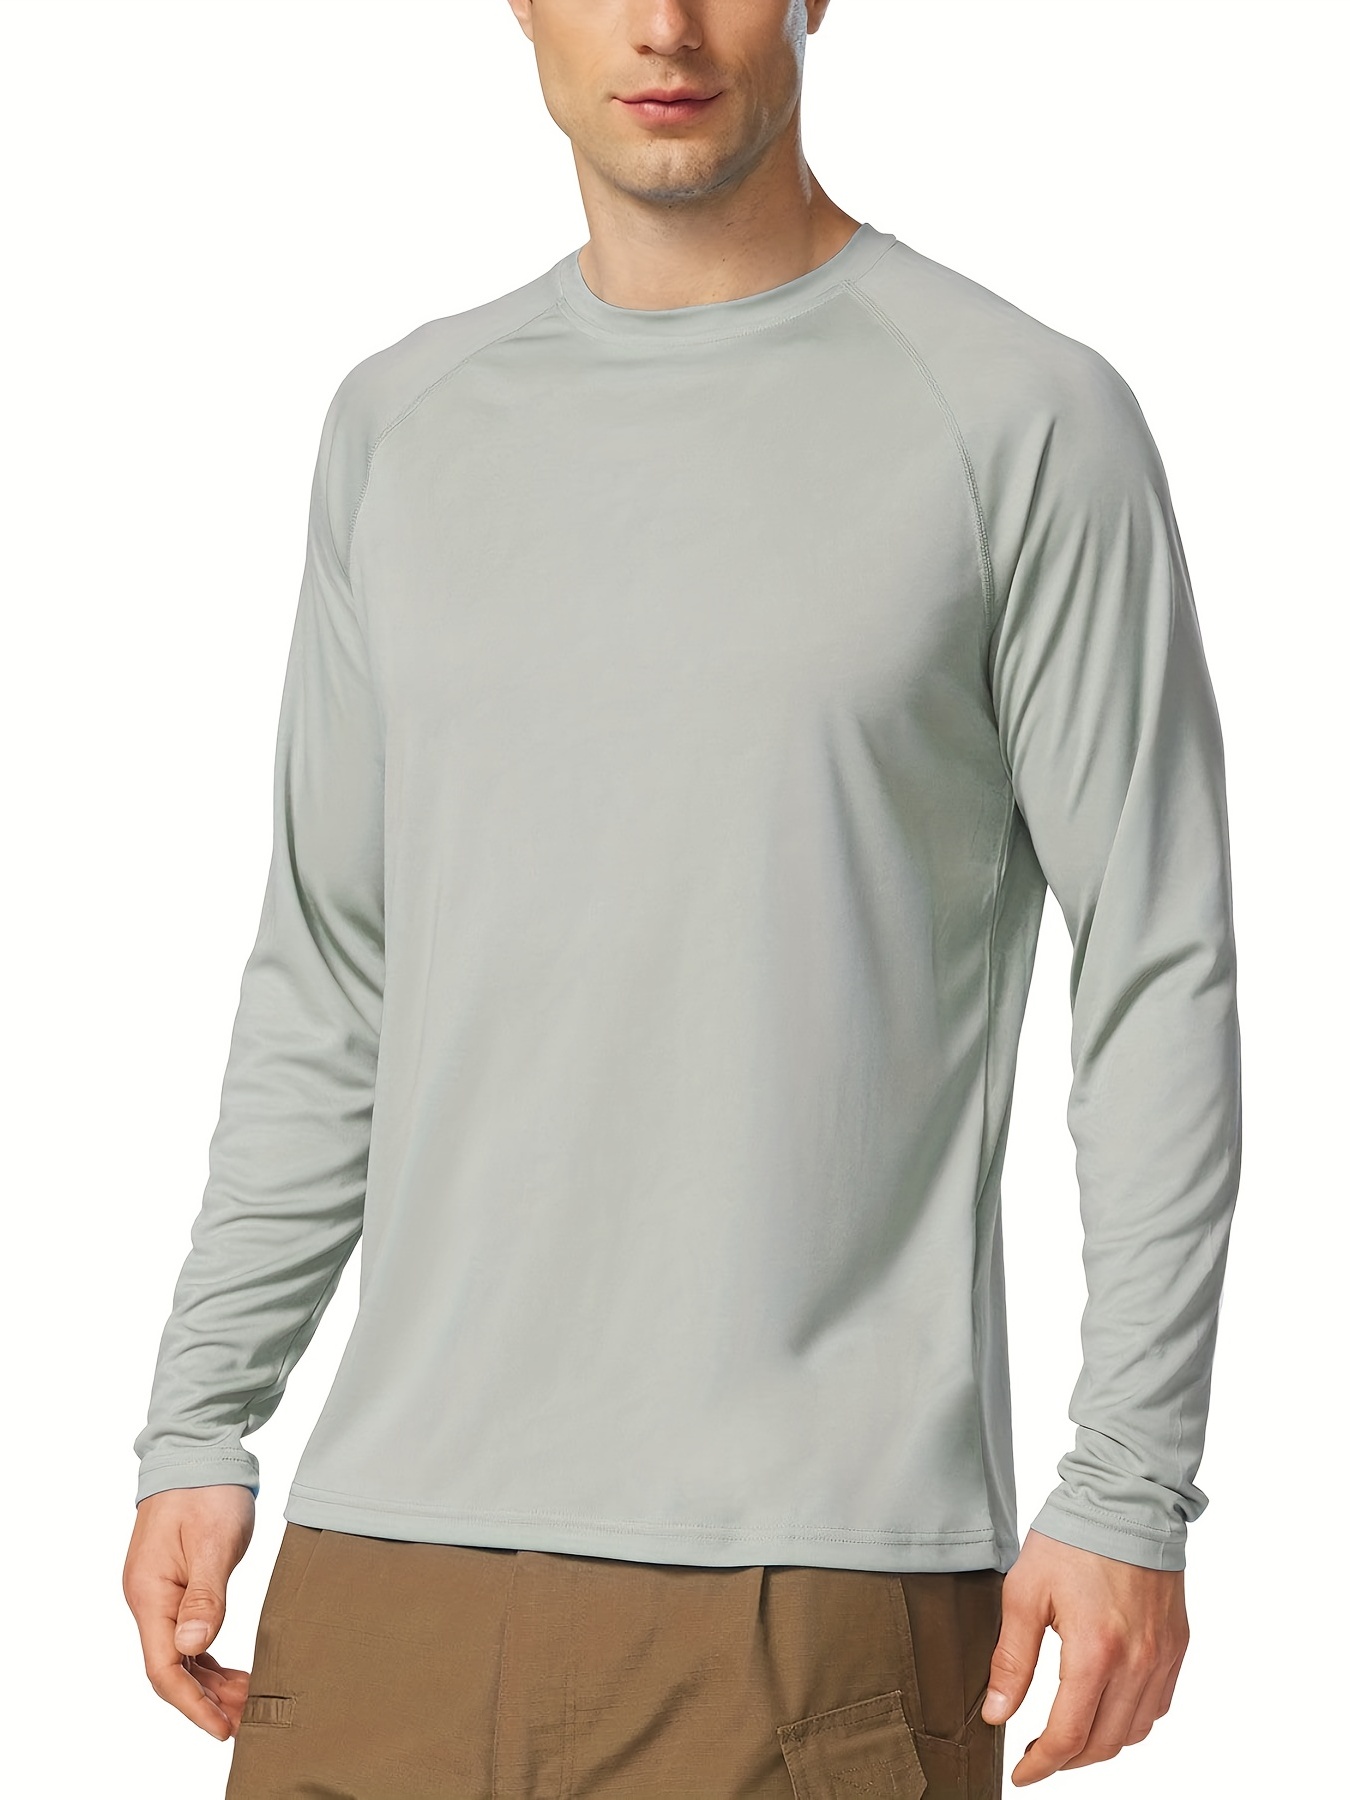 Men's Sun Protection Shirt: Quick-Dry, UPF 50+, Long-Sleeve Rash Guard For  Fishing, Running, And Hiking